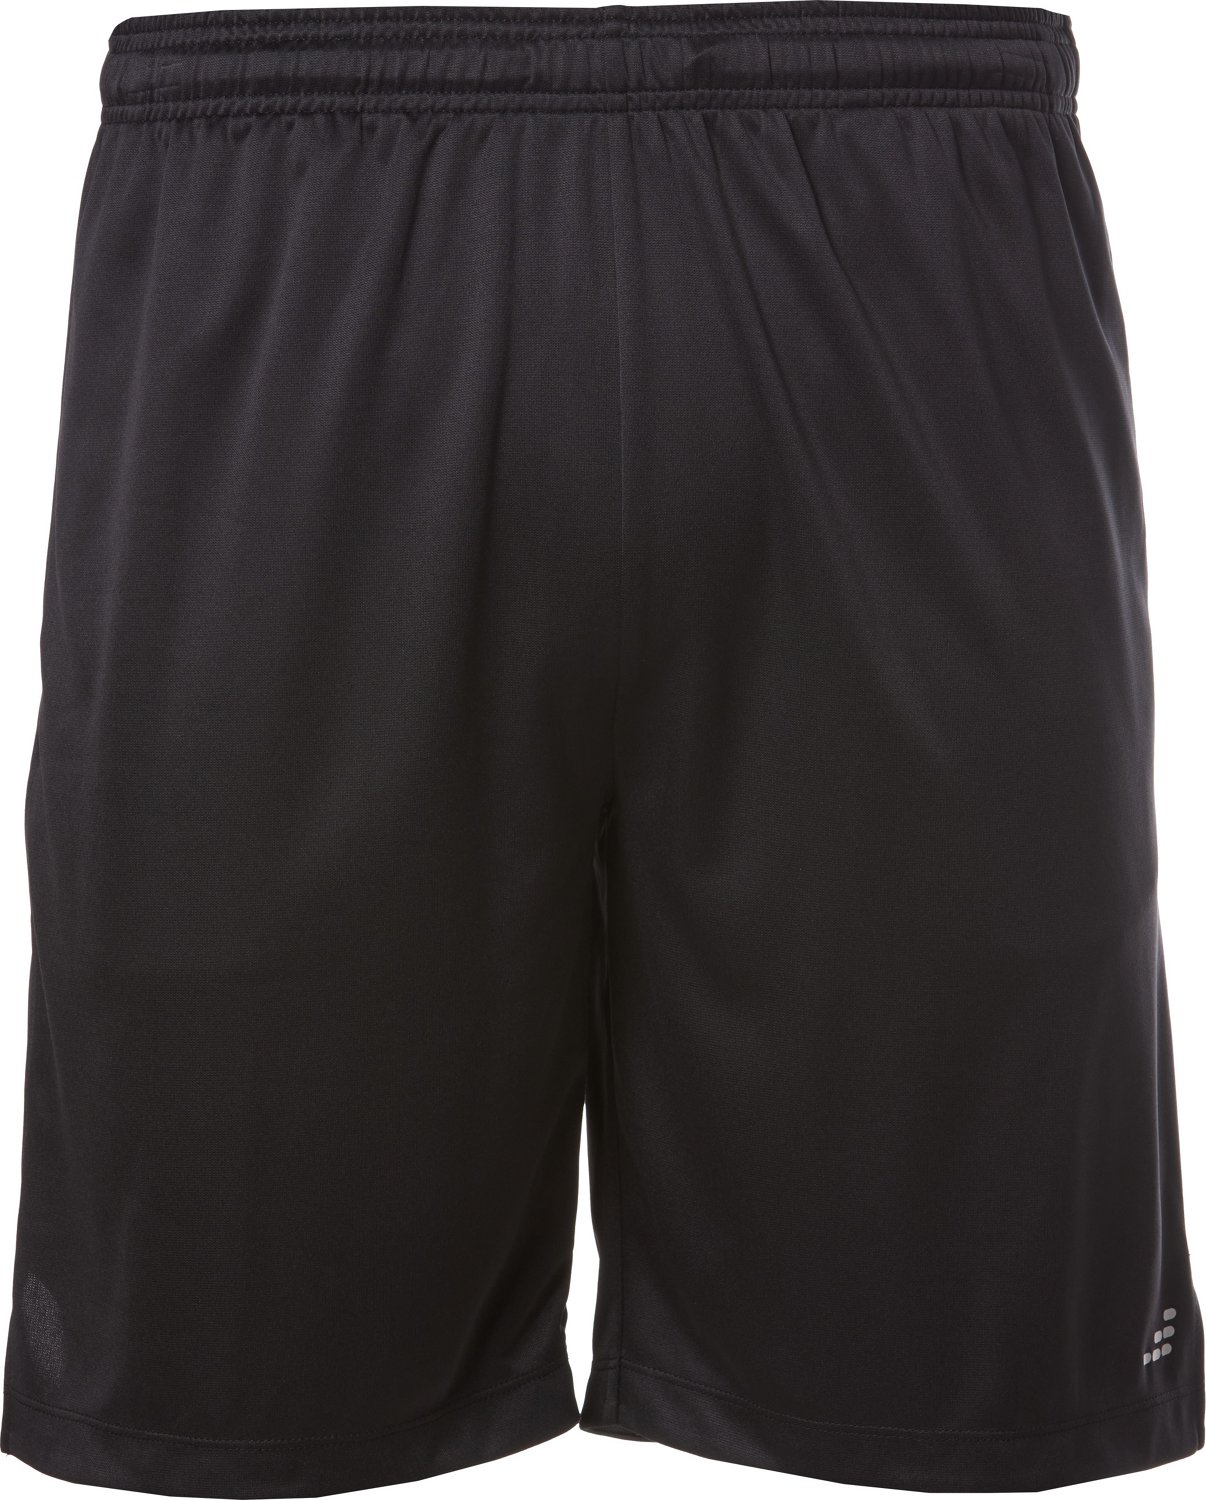 Black Fishing Pants & Shorts for sale